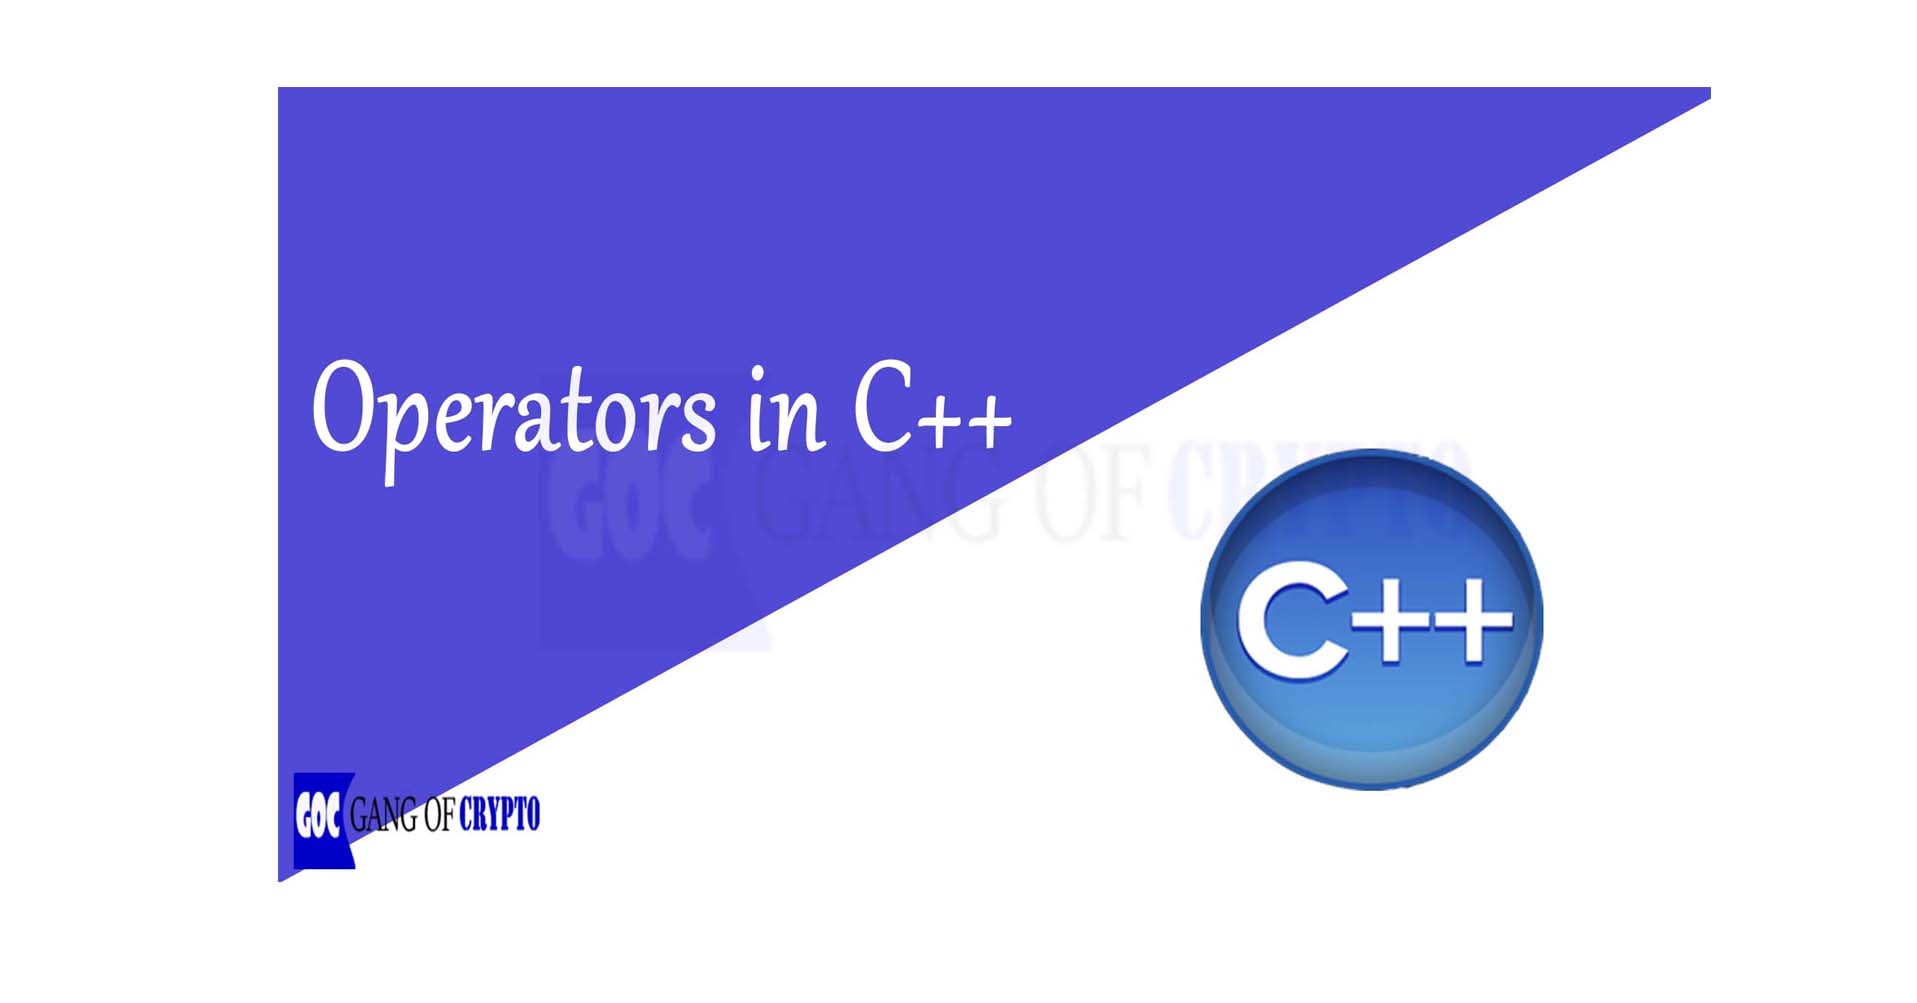 operatorss in C++ - gangofcrypto